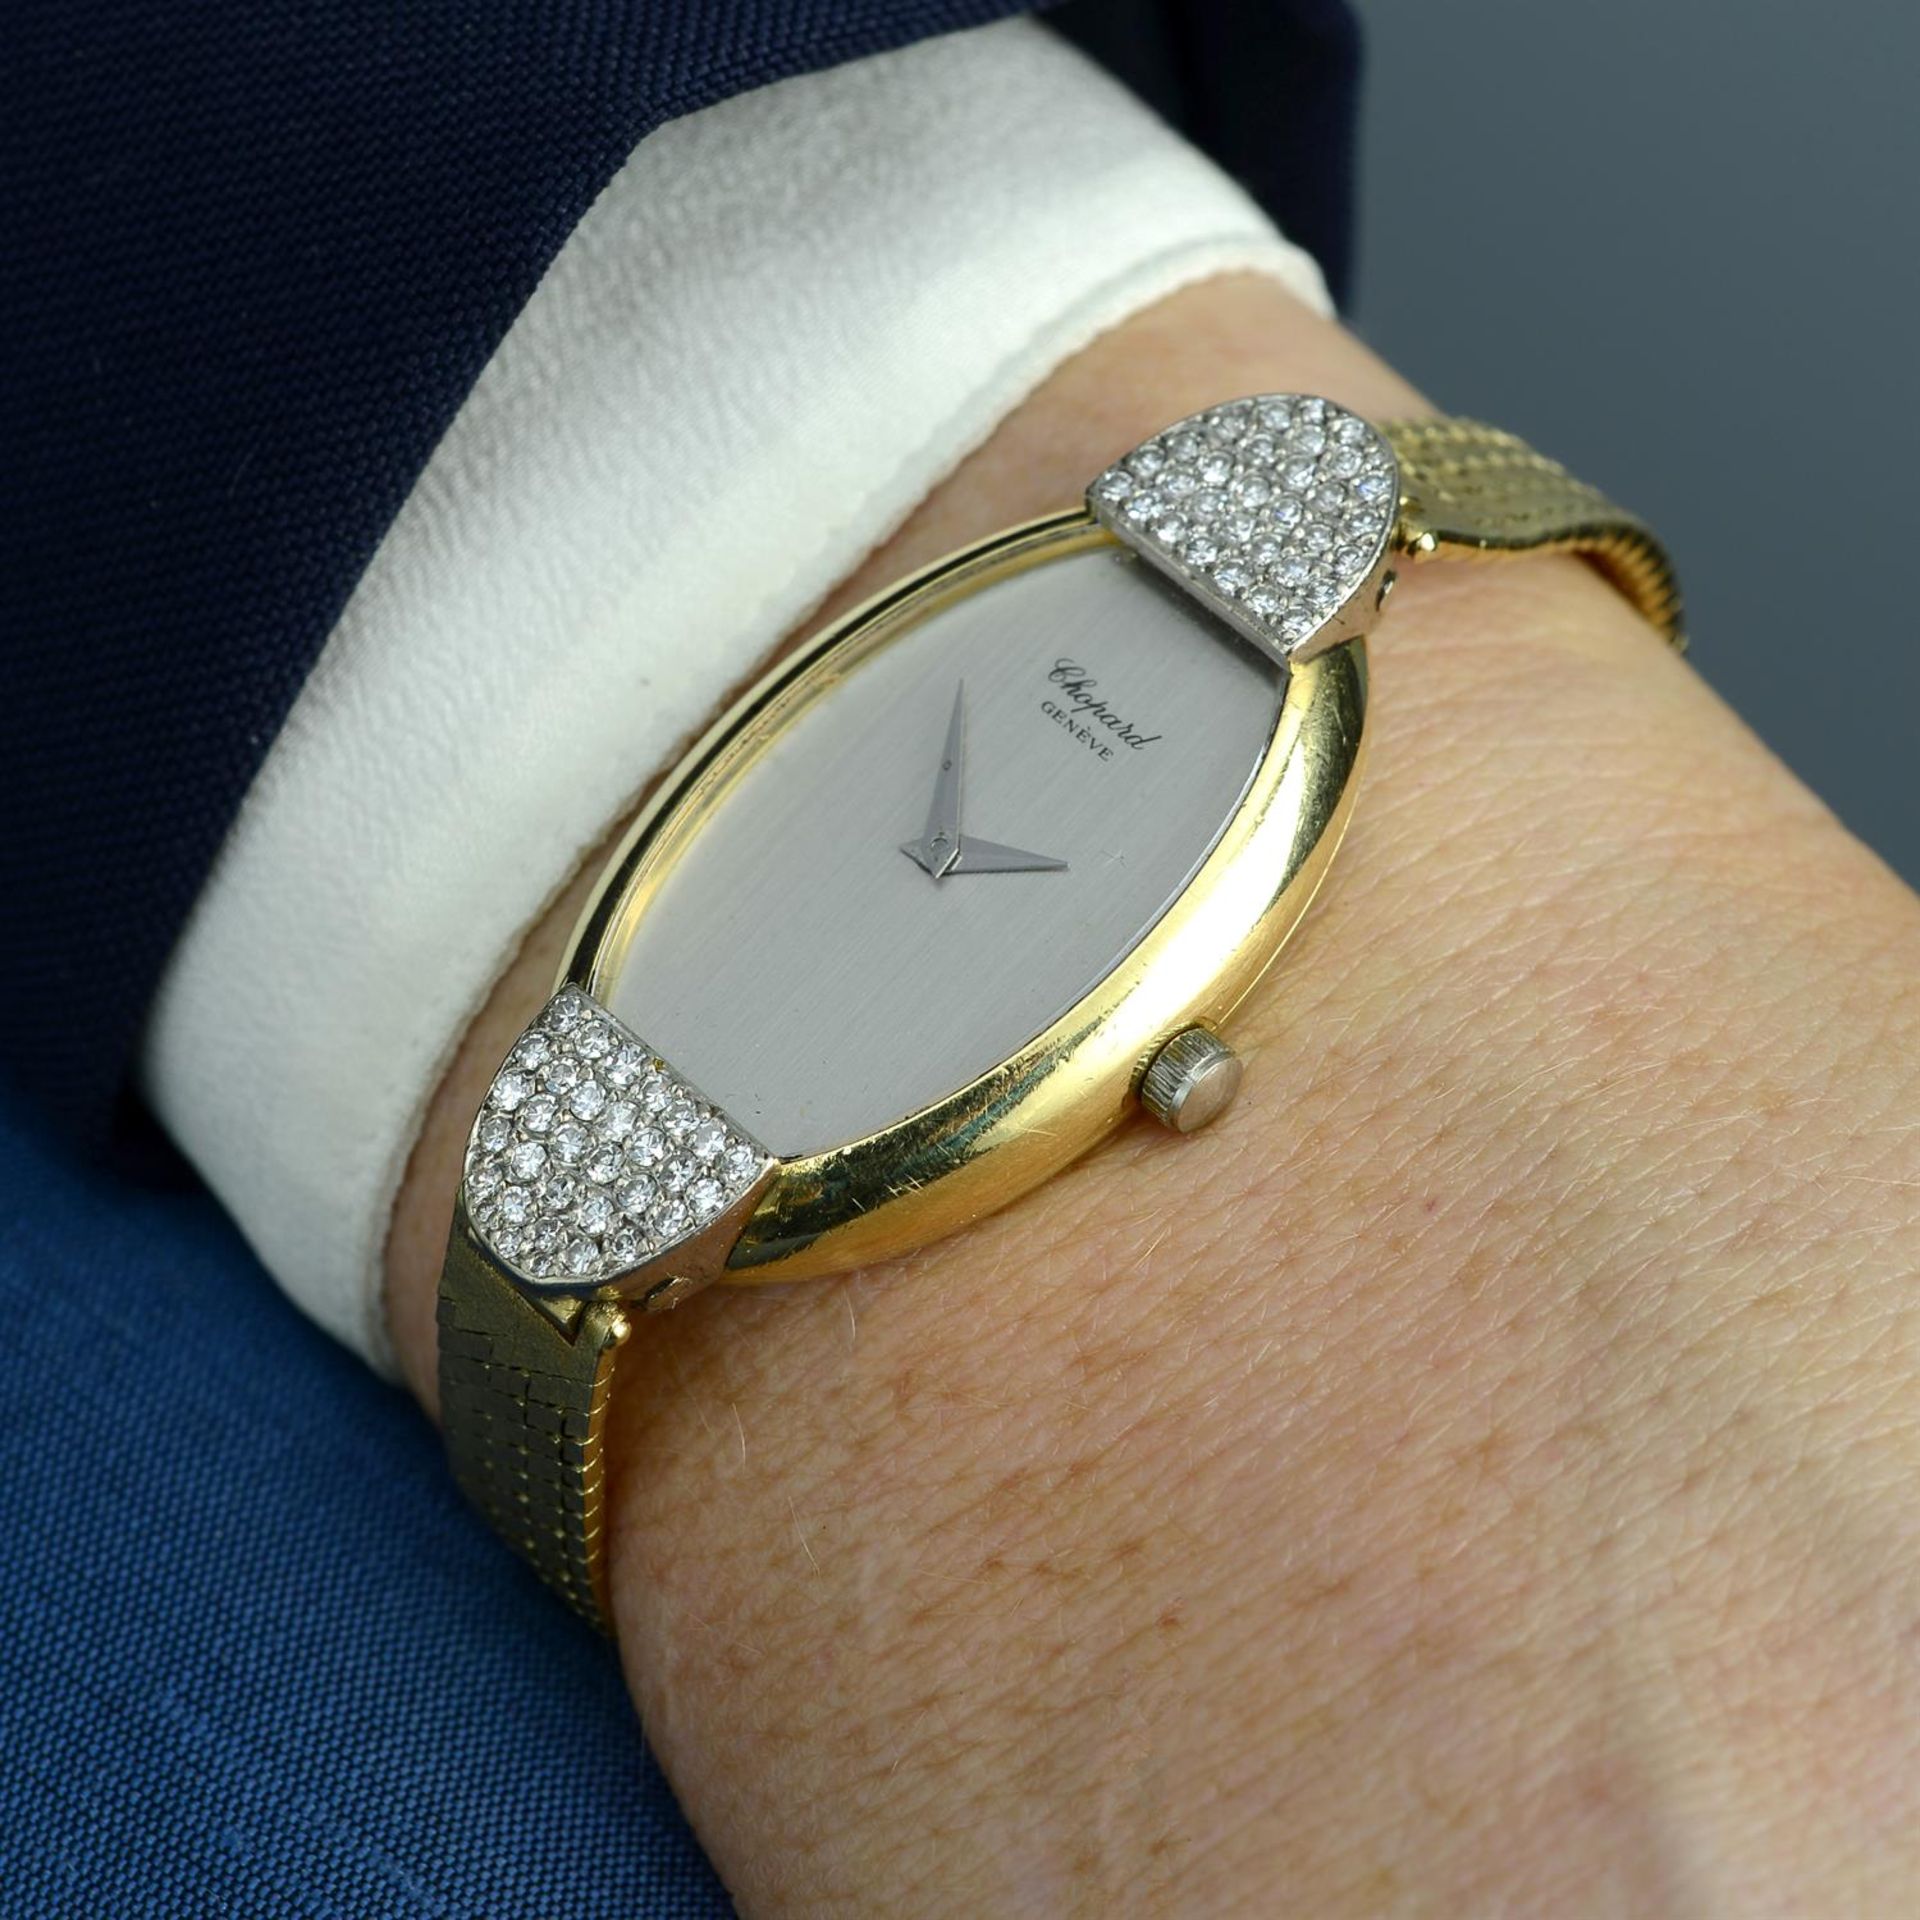 CHOPARD - a yellow metal diamond set bracelet watch, 22mm. - Image 5 of 5